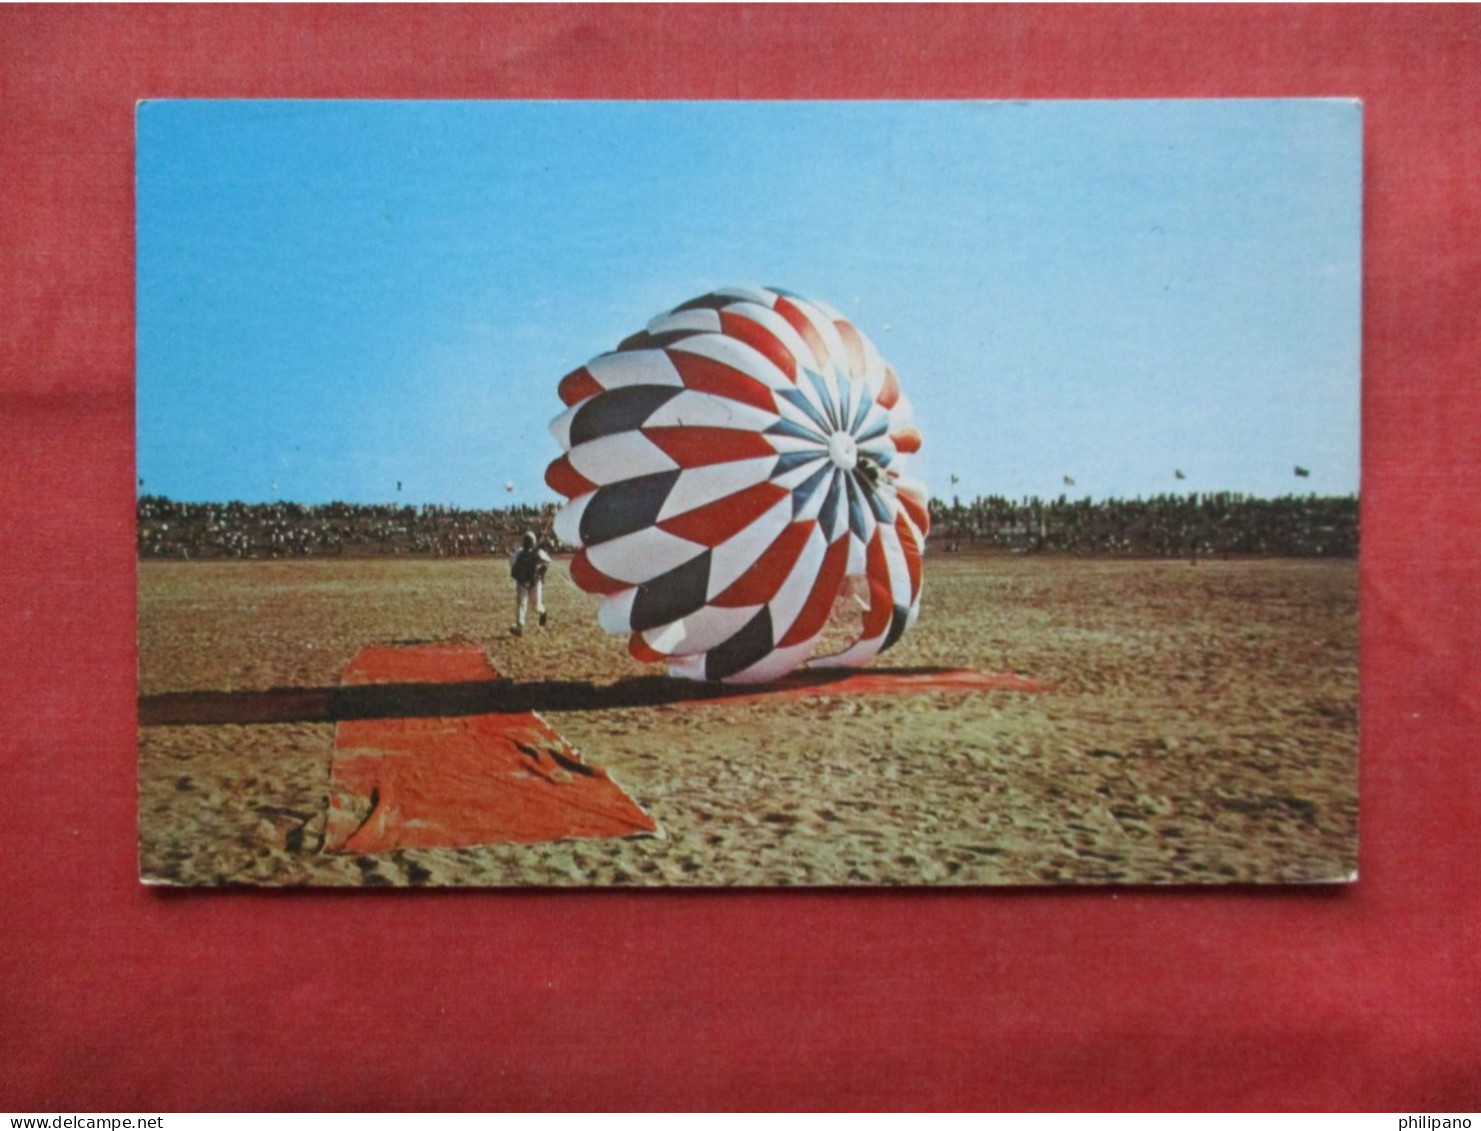 Parachutting  Contestant Land In Friendship  Bowl Orange  Massachusetts          Ref 6355 - Fallschirmspringen